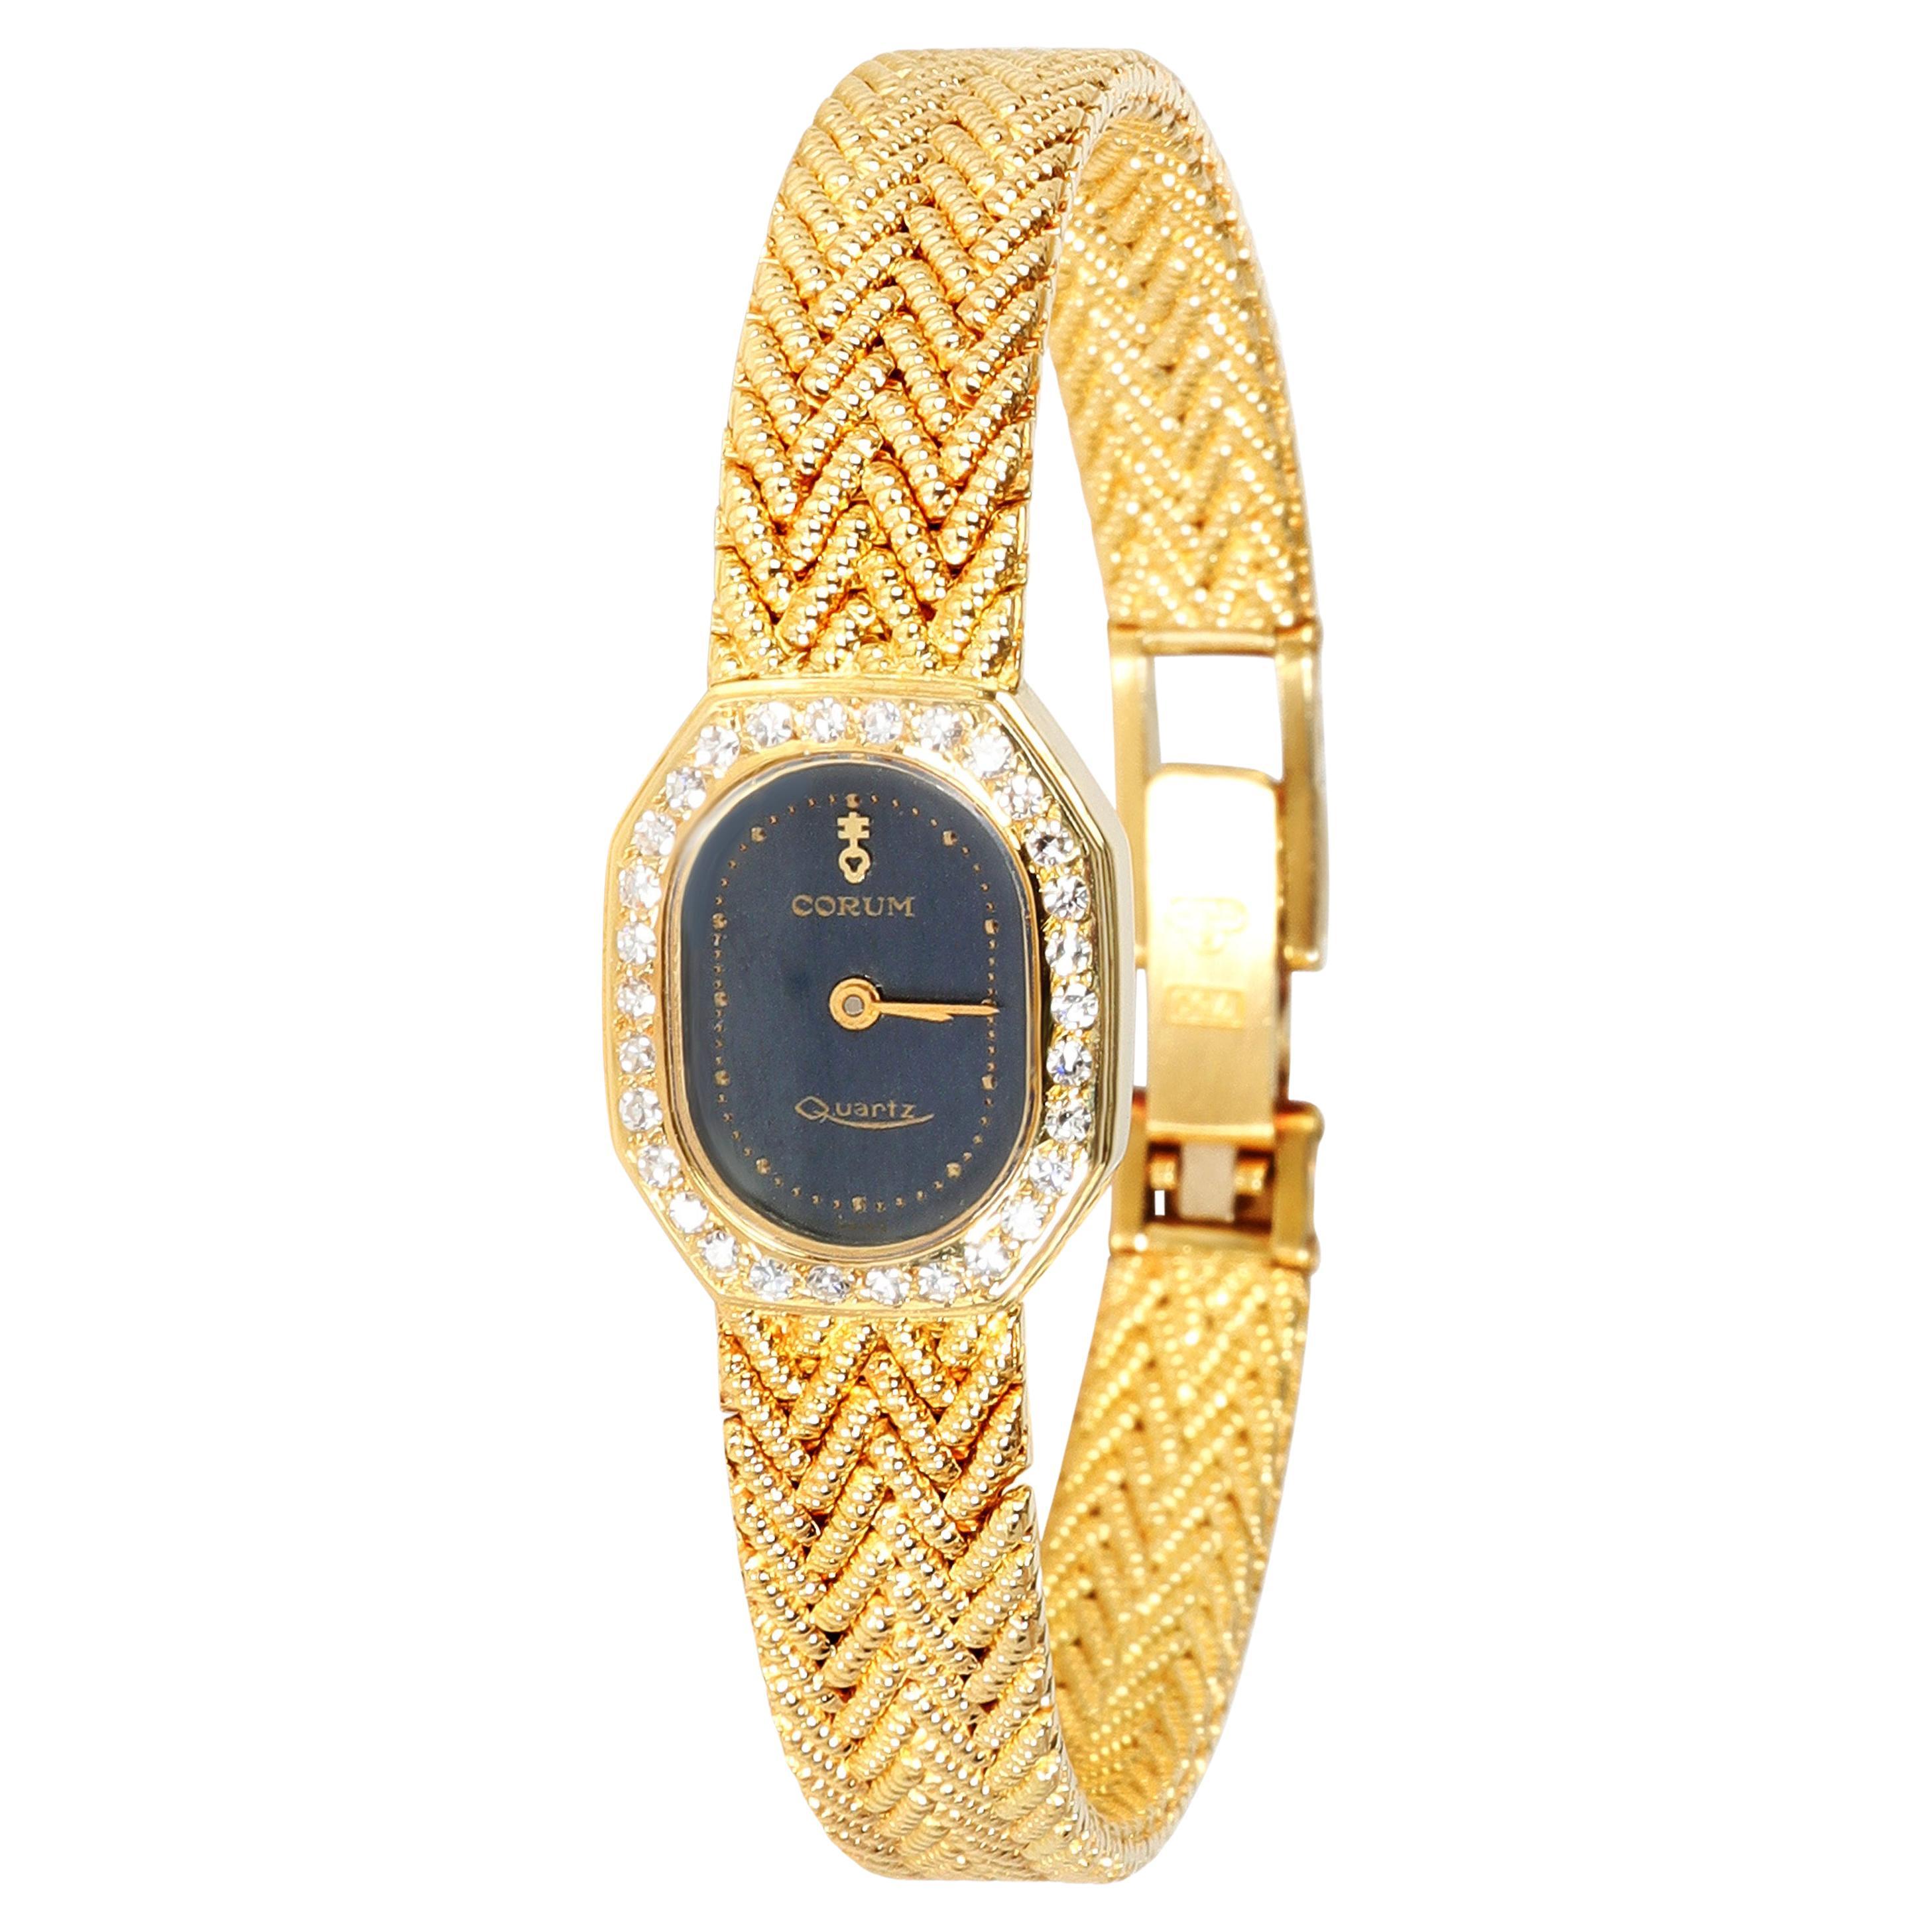 Corum Dress 37107 Women's Watch in 18kt Yellow Gold